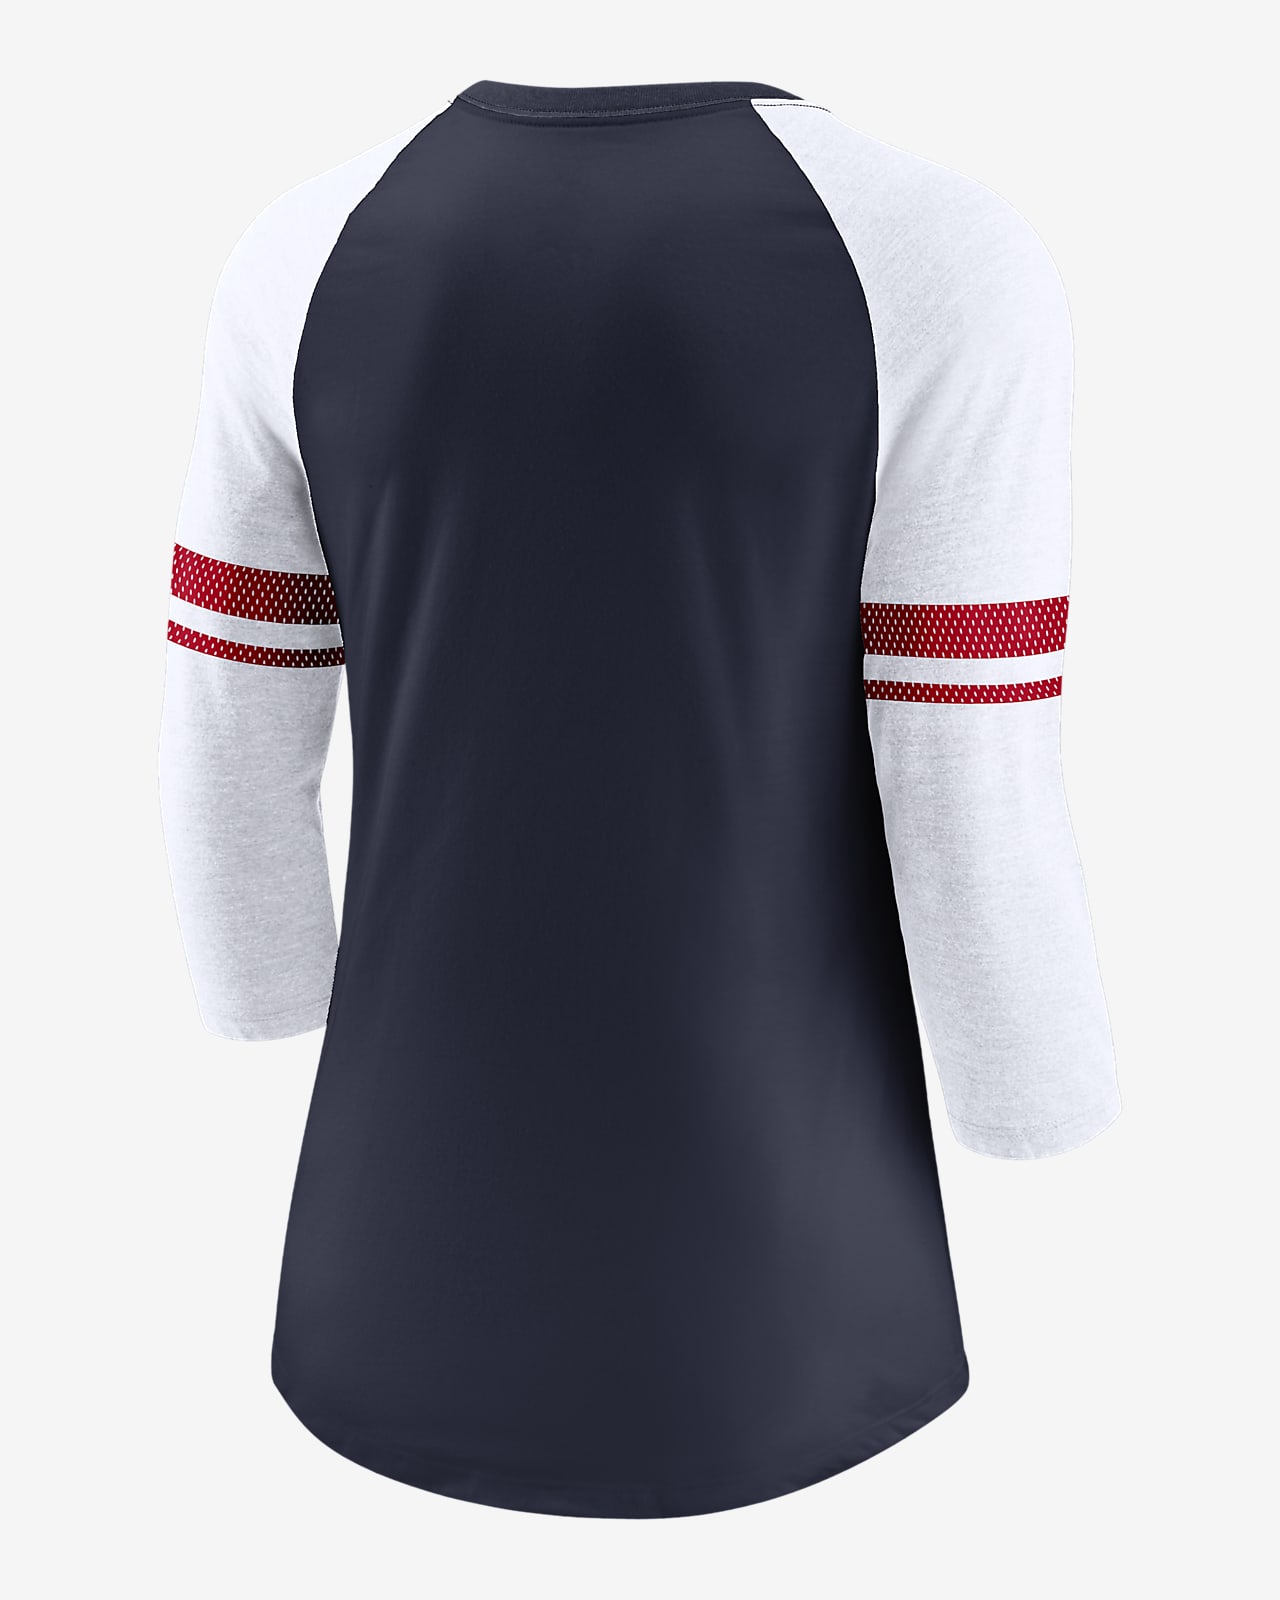 Nike Fashion (NFL New England Patriots) Women's 3/4-Sleeve T-Shirt.